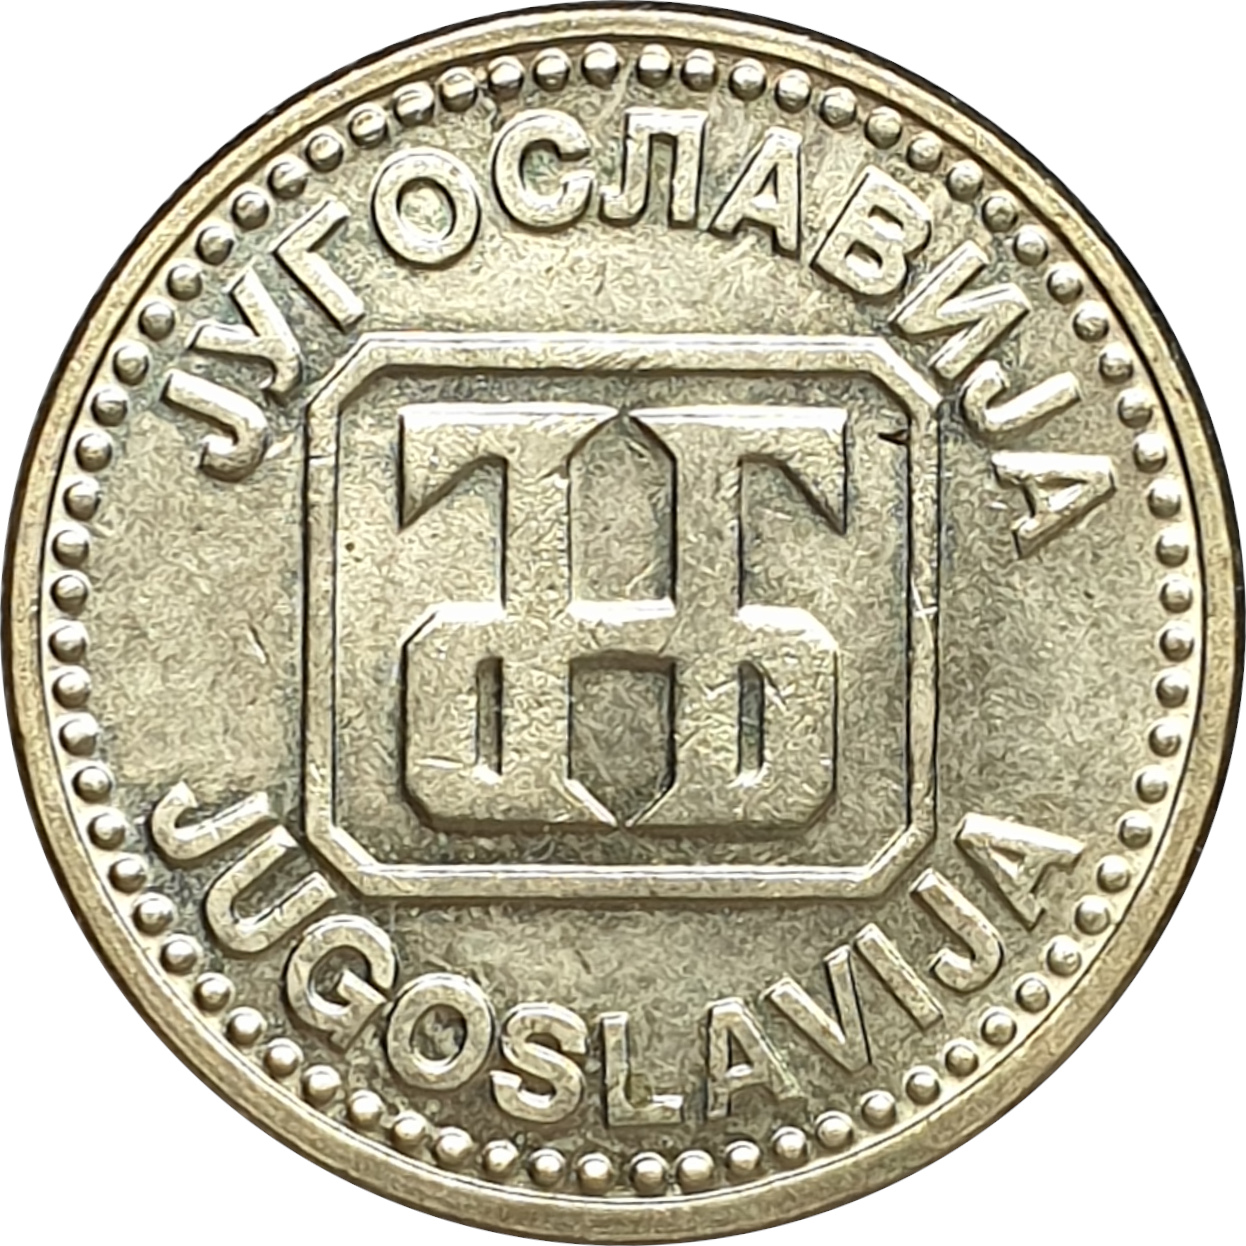 50 dinara - Monogram - Brass